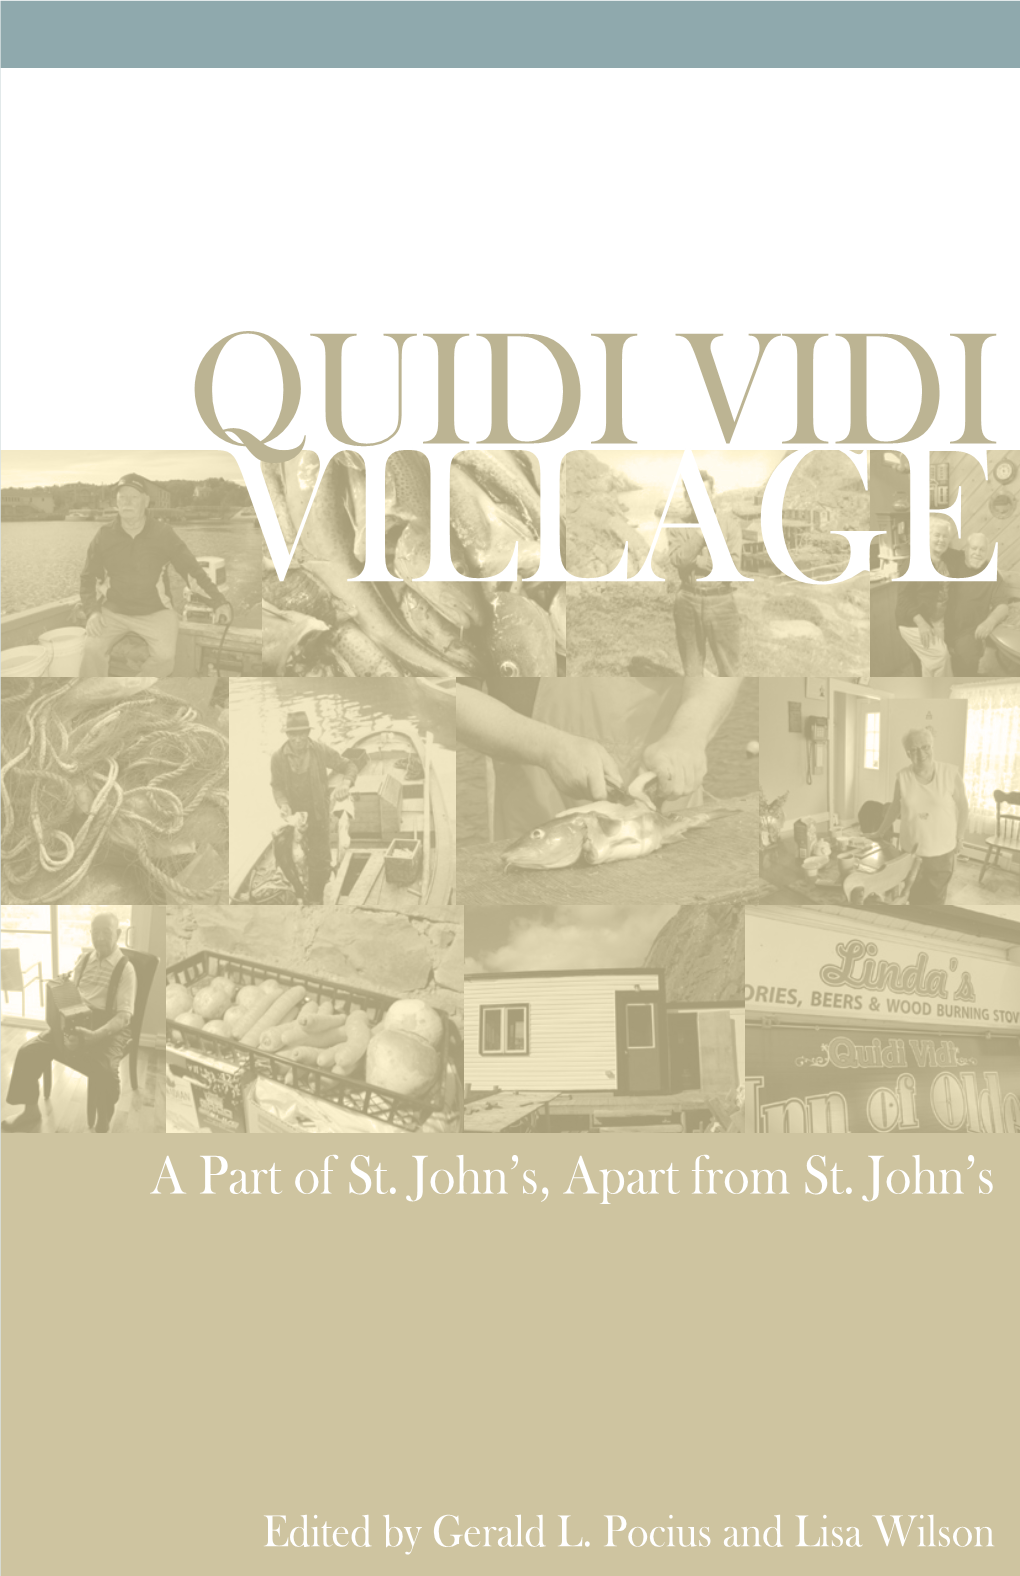 Quidi Vidi Village: a Part of St. John's, Apart from St. John's